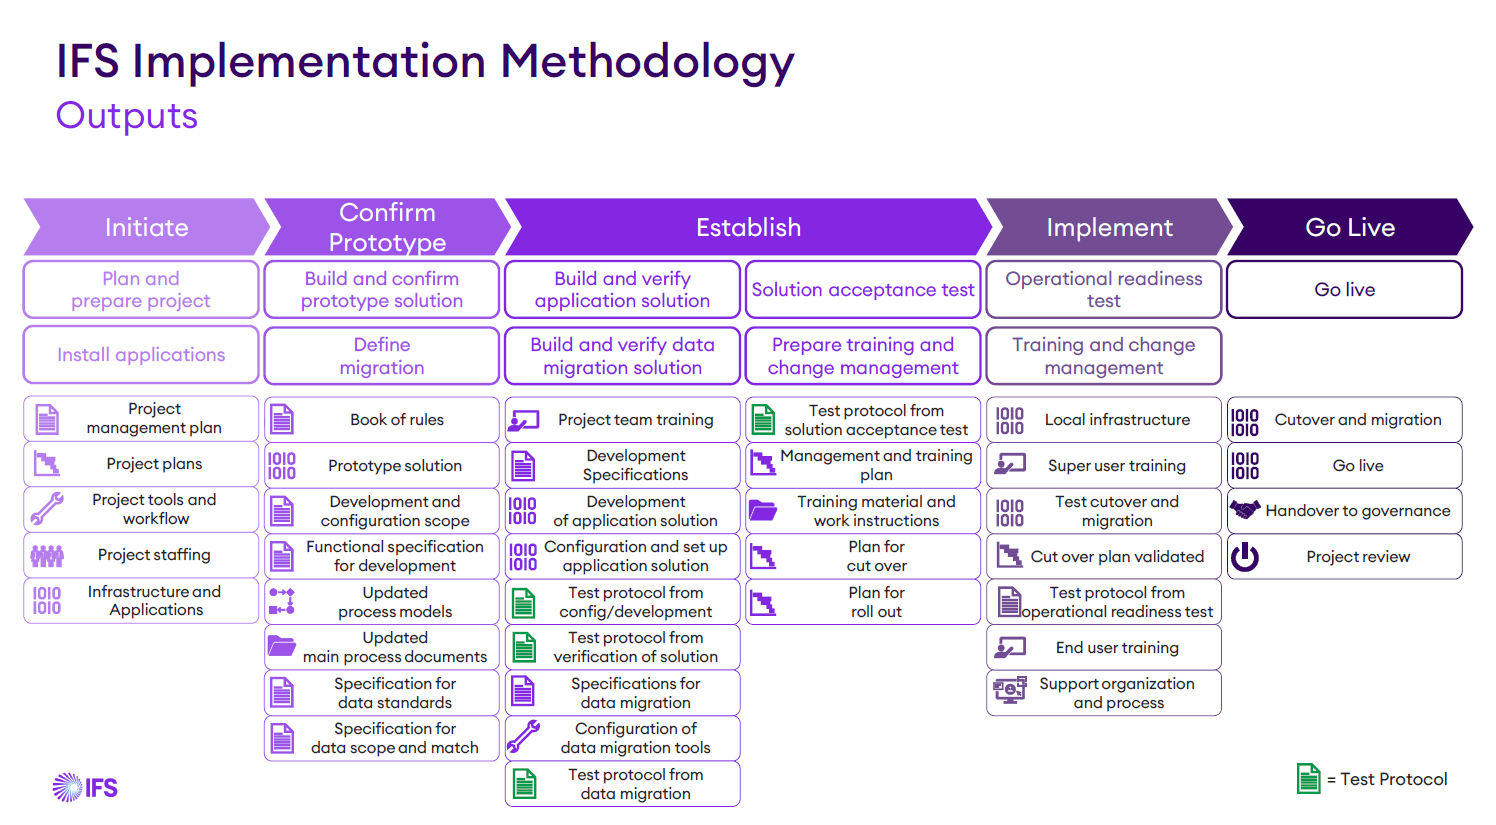 IFS implementation methodology